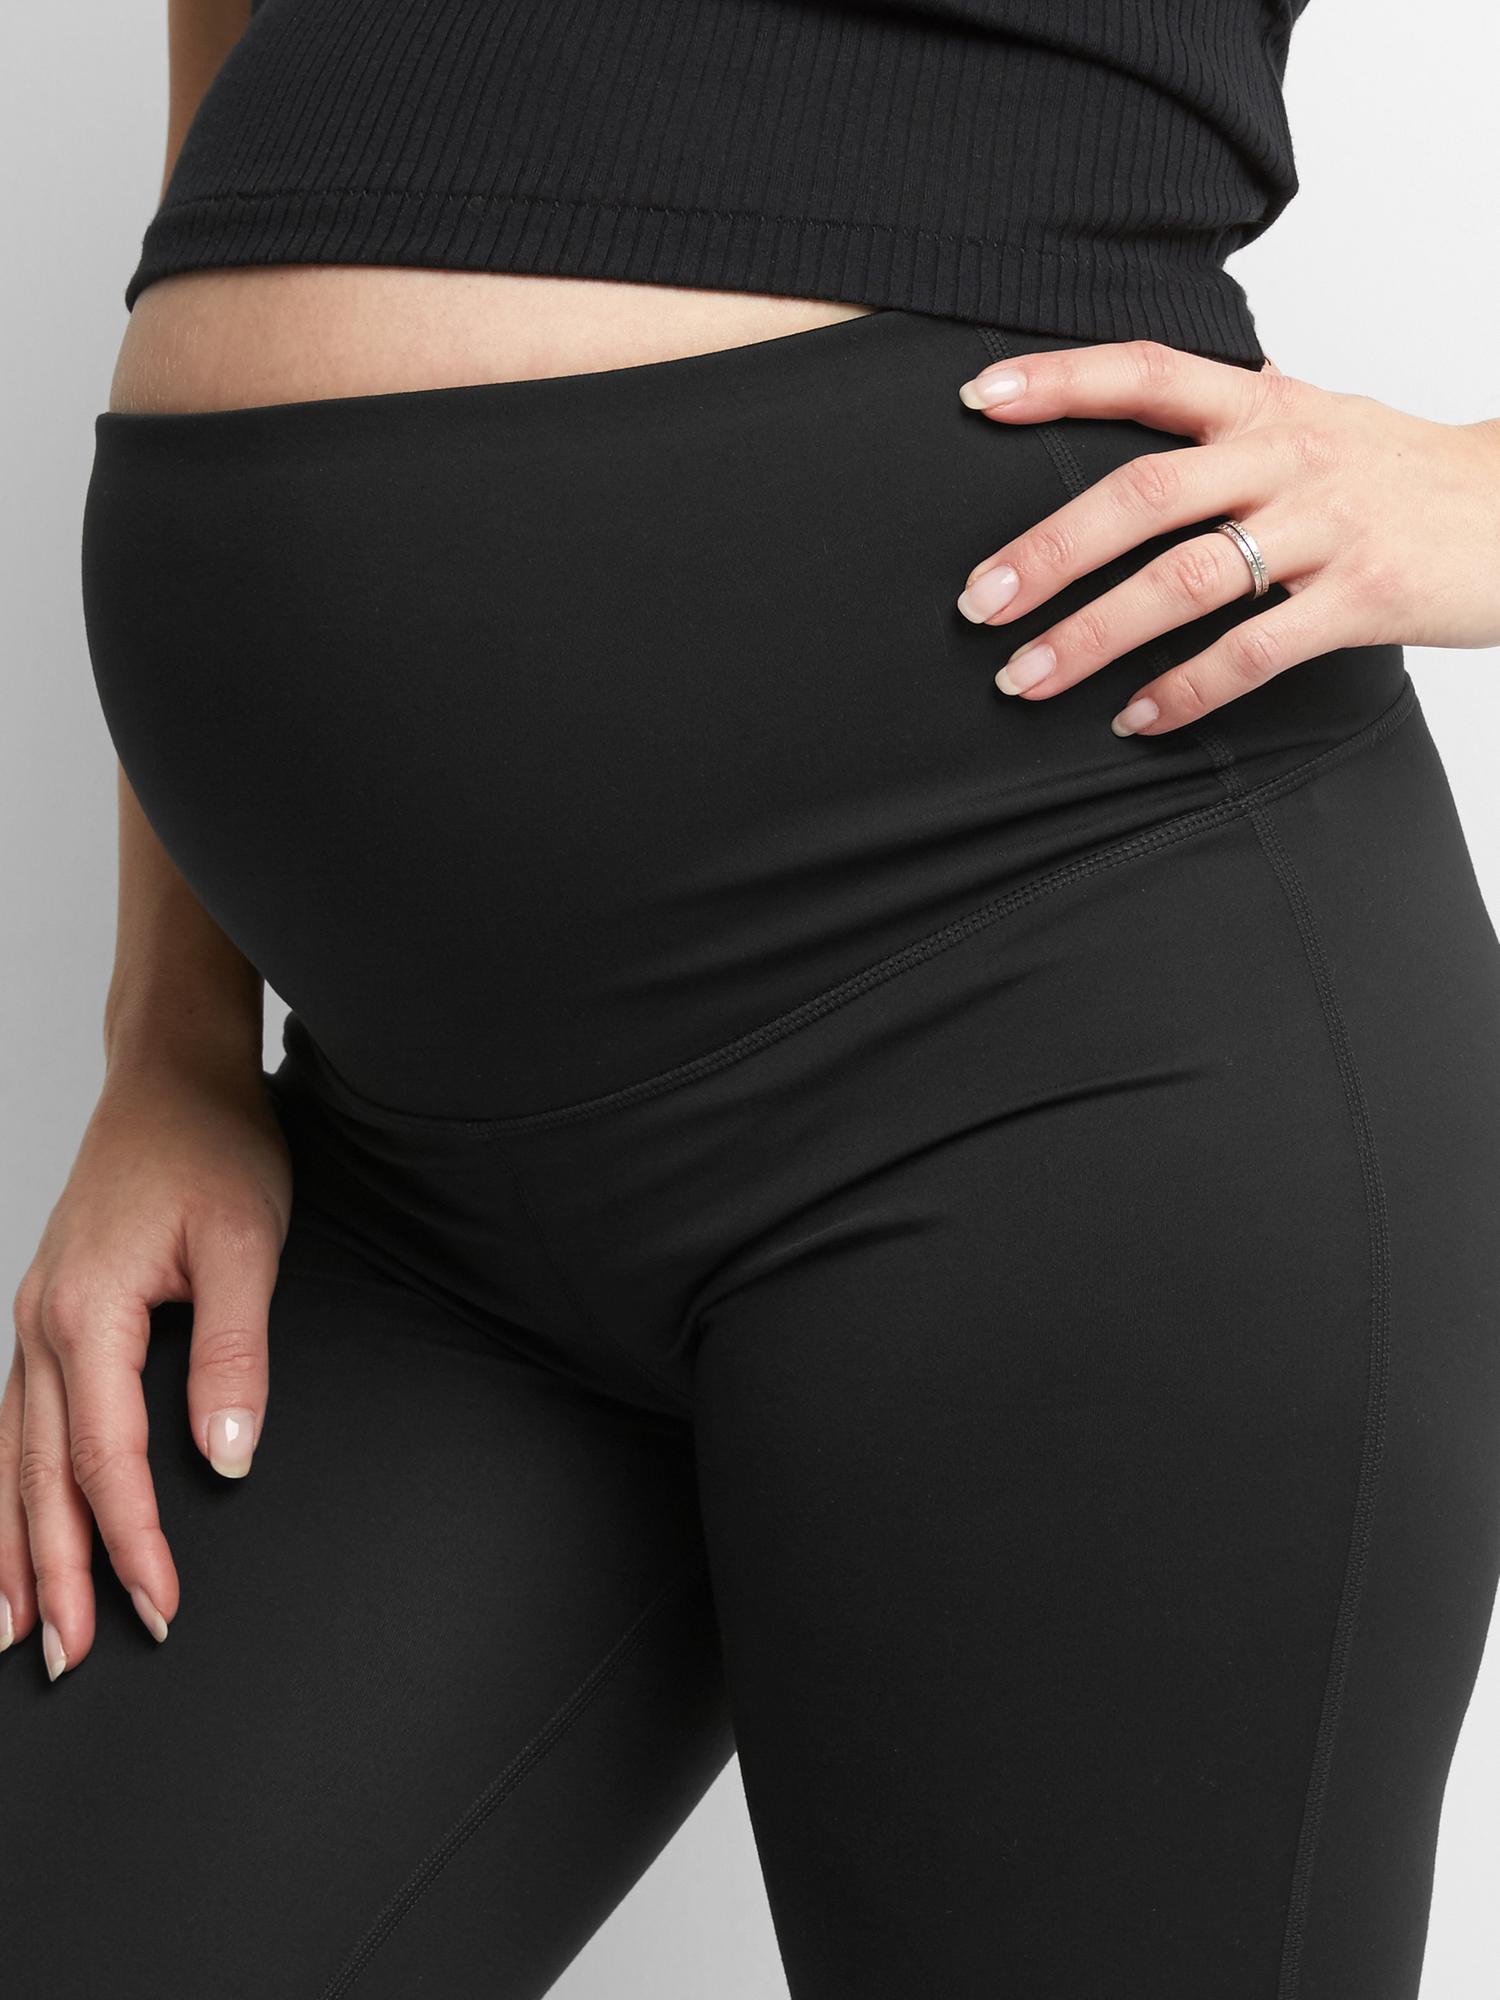 NWT Gap Maternity Pants Stretch 0A Charcoal Gray Full panel